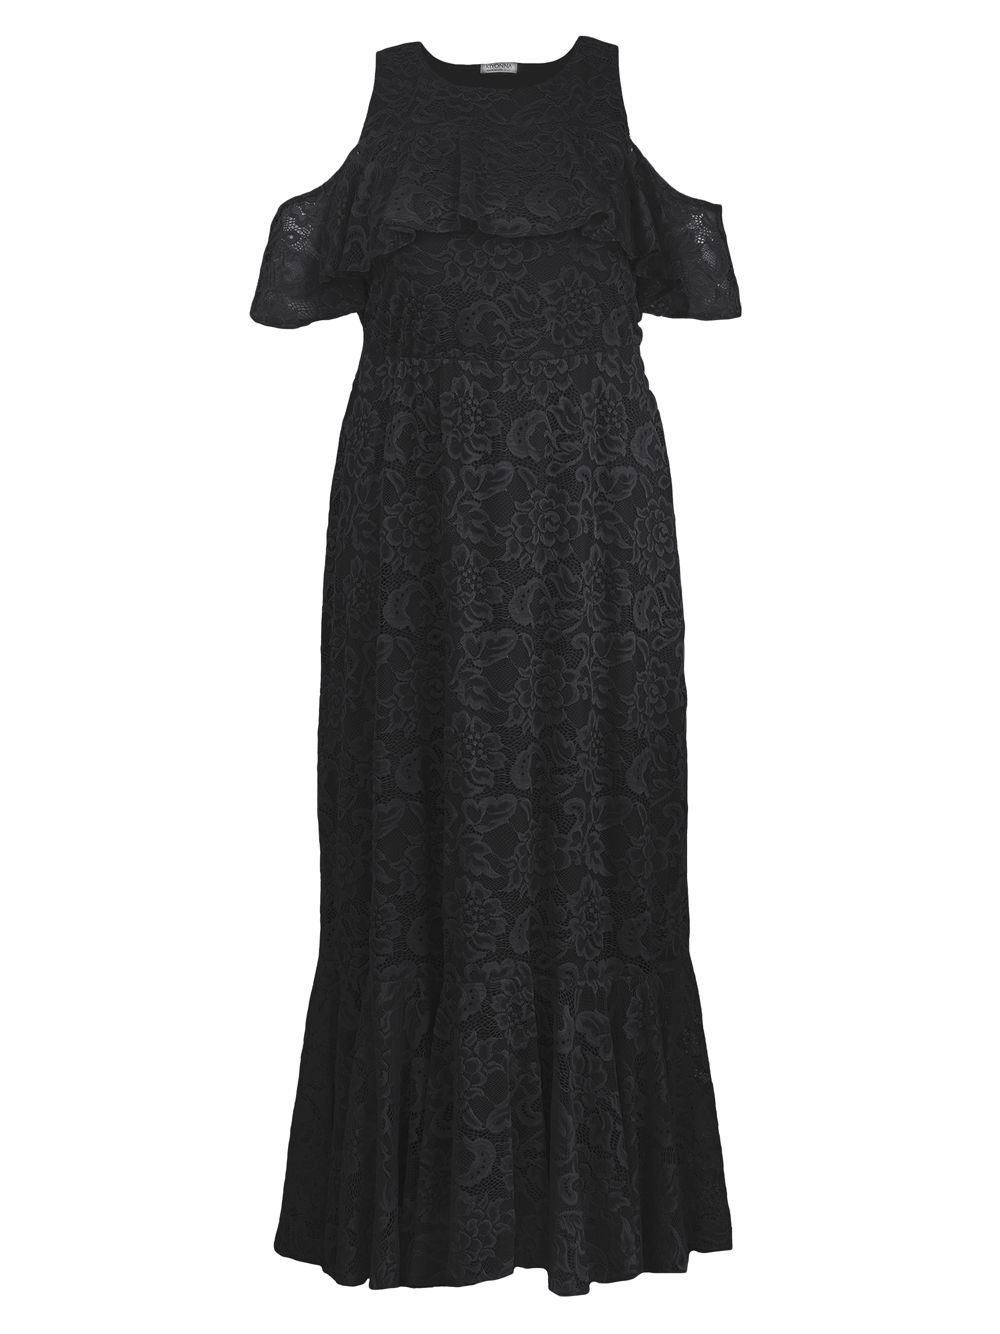 Кружевное платье Riviera с открытыми плечами Kiyonna, черный кружевное платье мадемуазель kiyonna синий